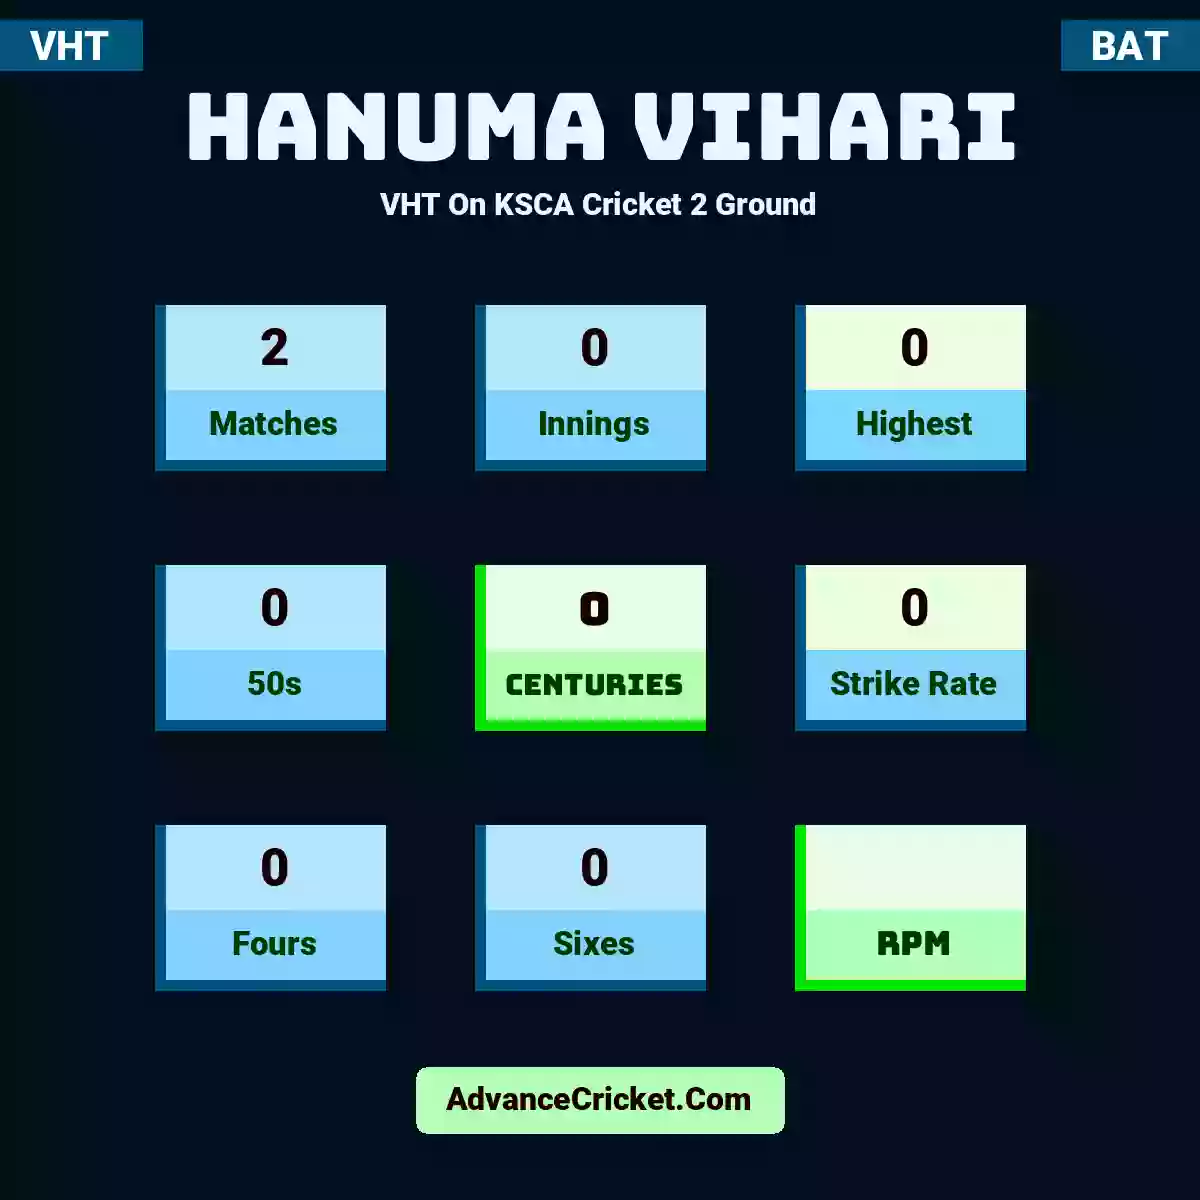 Hanuma Vihari VHT  On KSCA Cricket 2 Ground, Hanuma Vihari played 2 matches, scored 0 runs as highest, 0 half-centuries, and 0 centuries, with a strike rate of 0. H.Vihari hit 0 fours and 0 sixes.